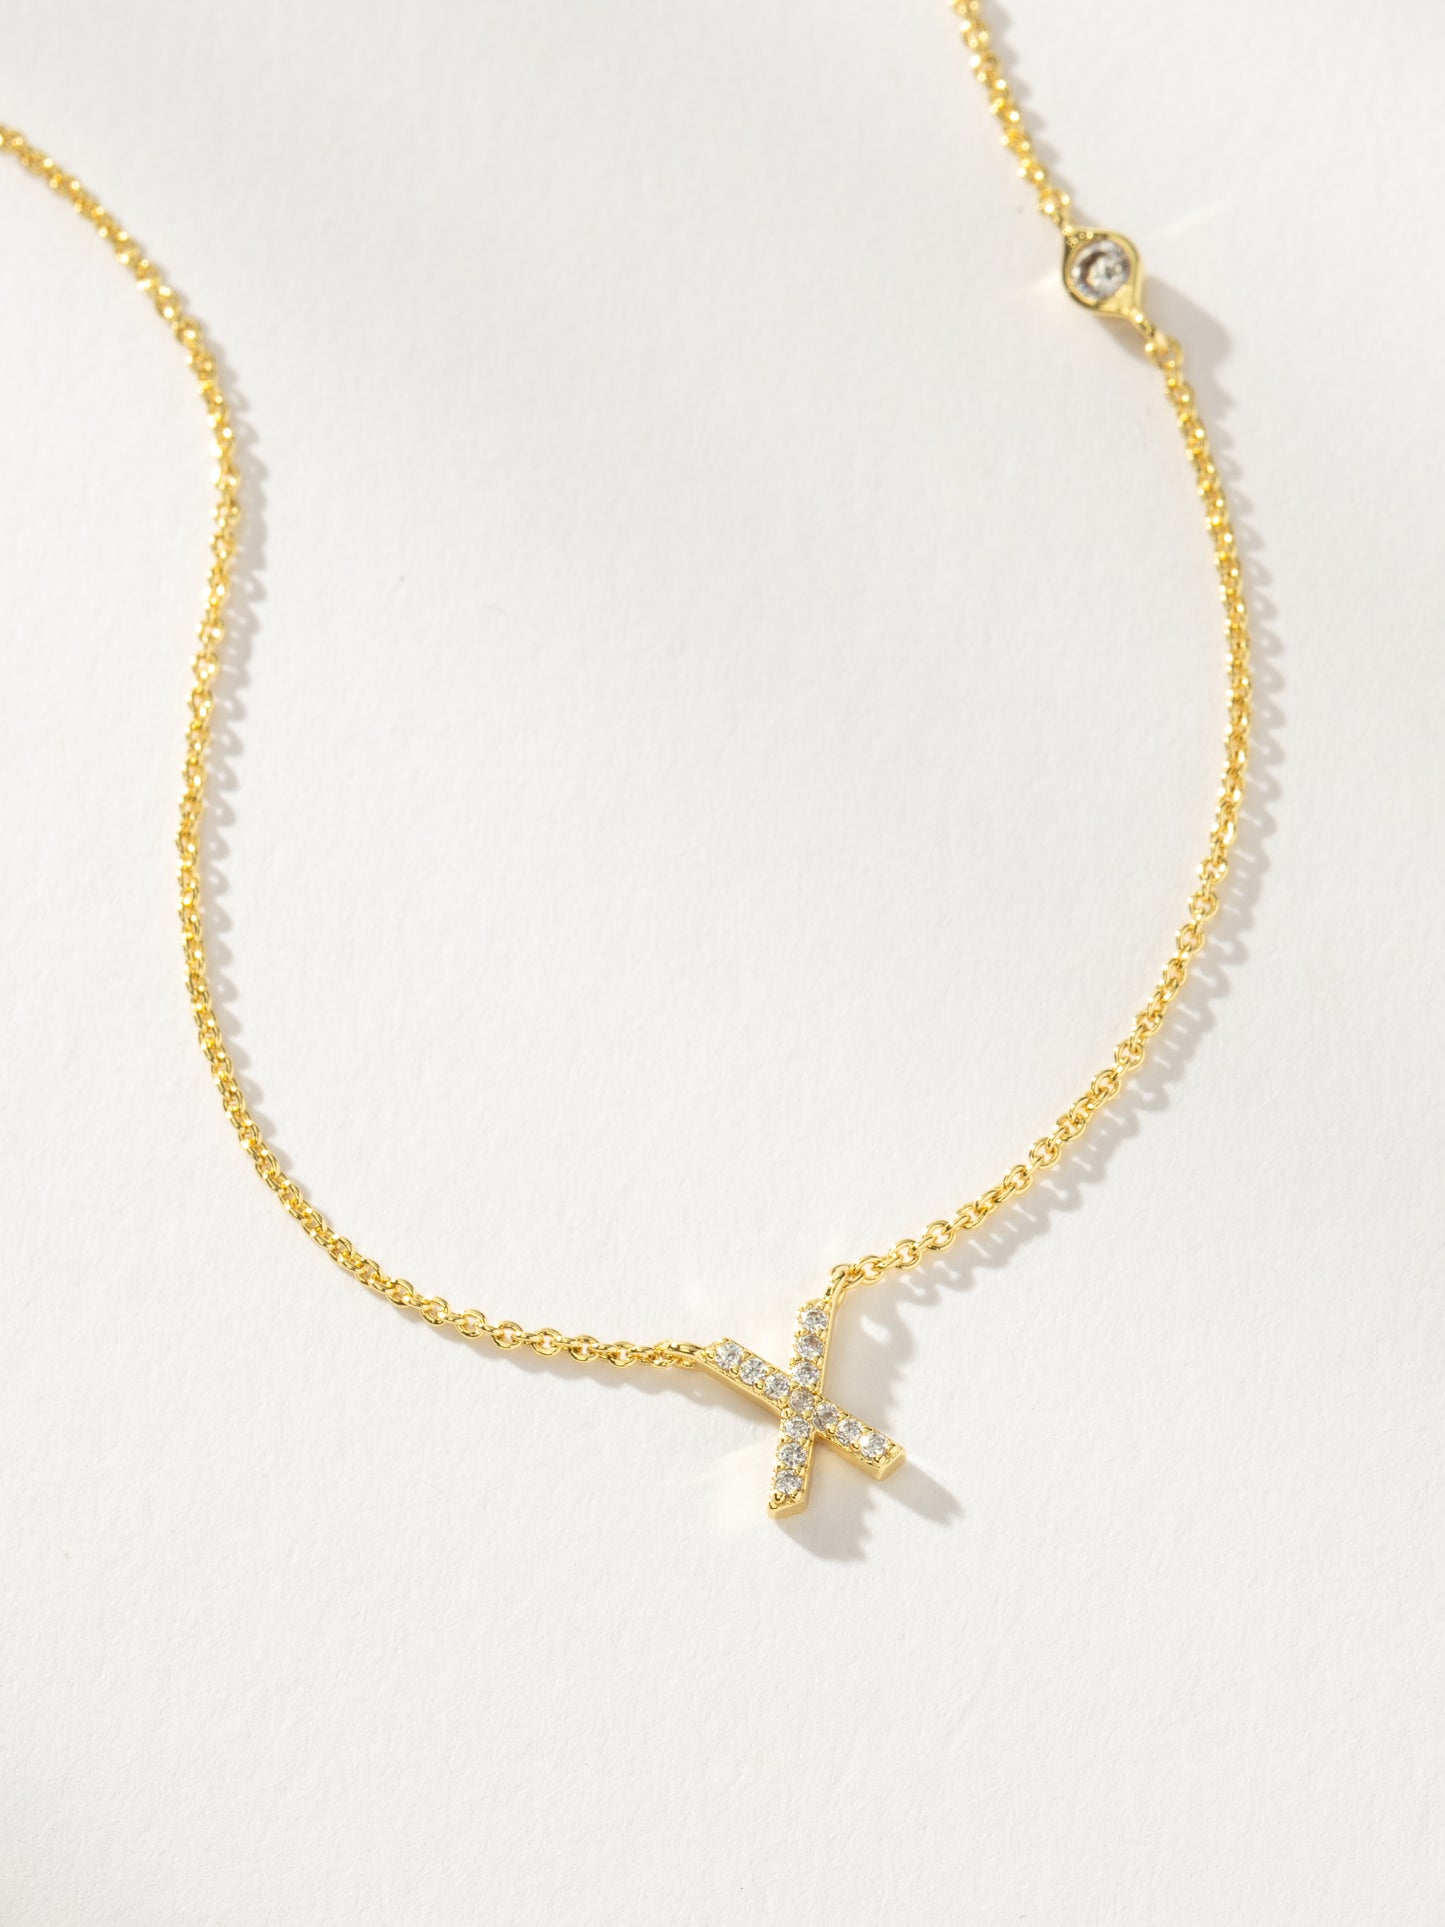 Pavé Initial Necklace | Gold X | Product Detail Image | Uncommon James